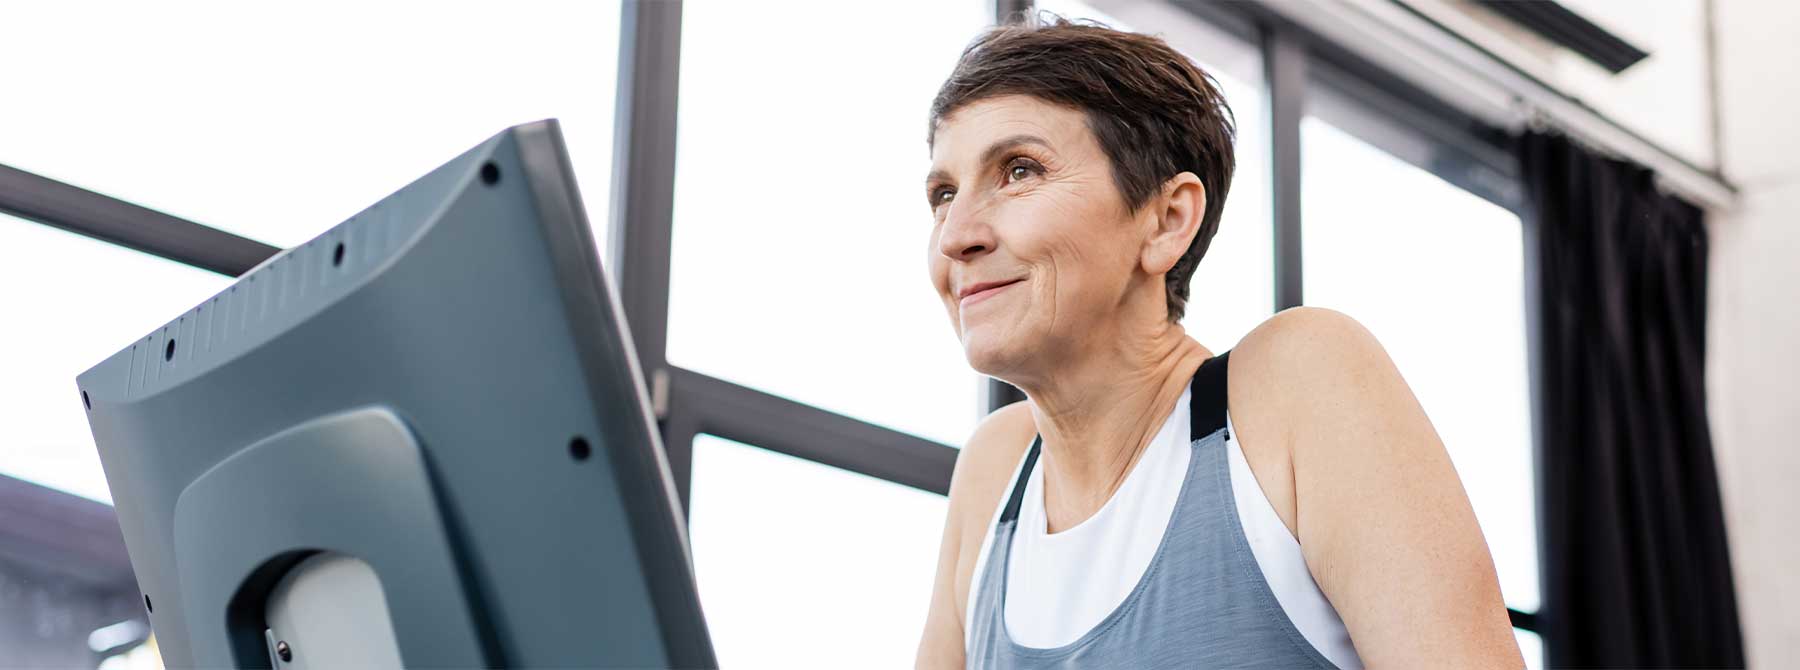 woman on treadmill after minimally invasive spine surgery